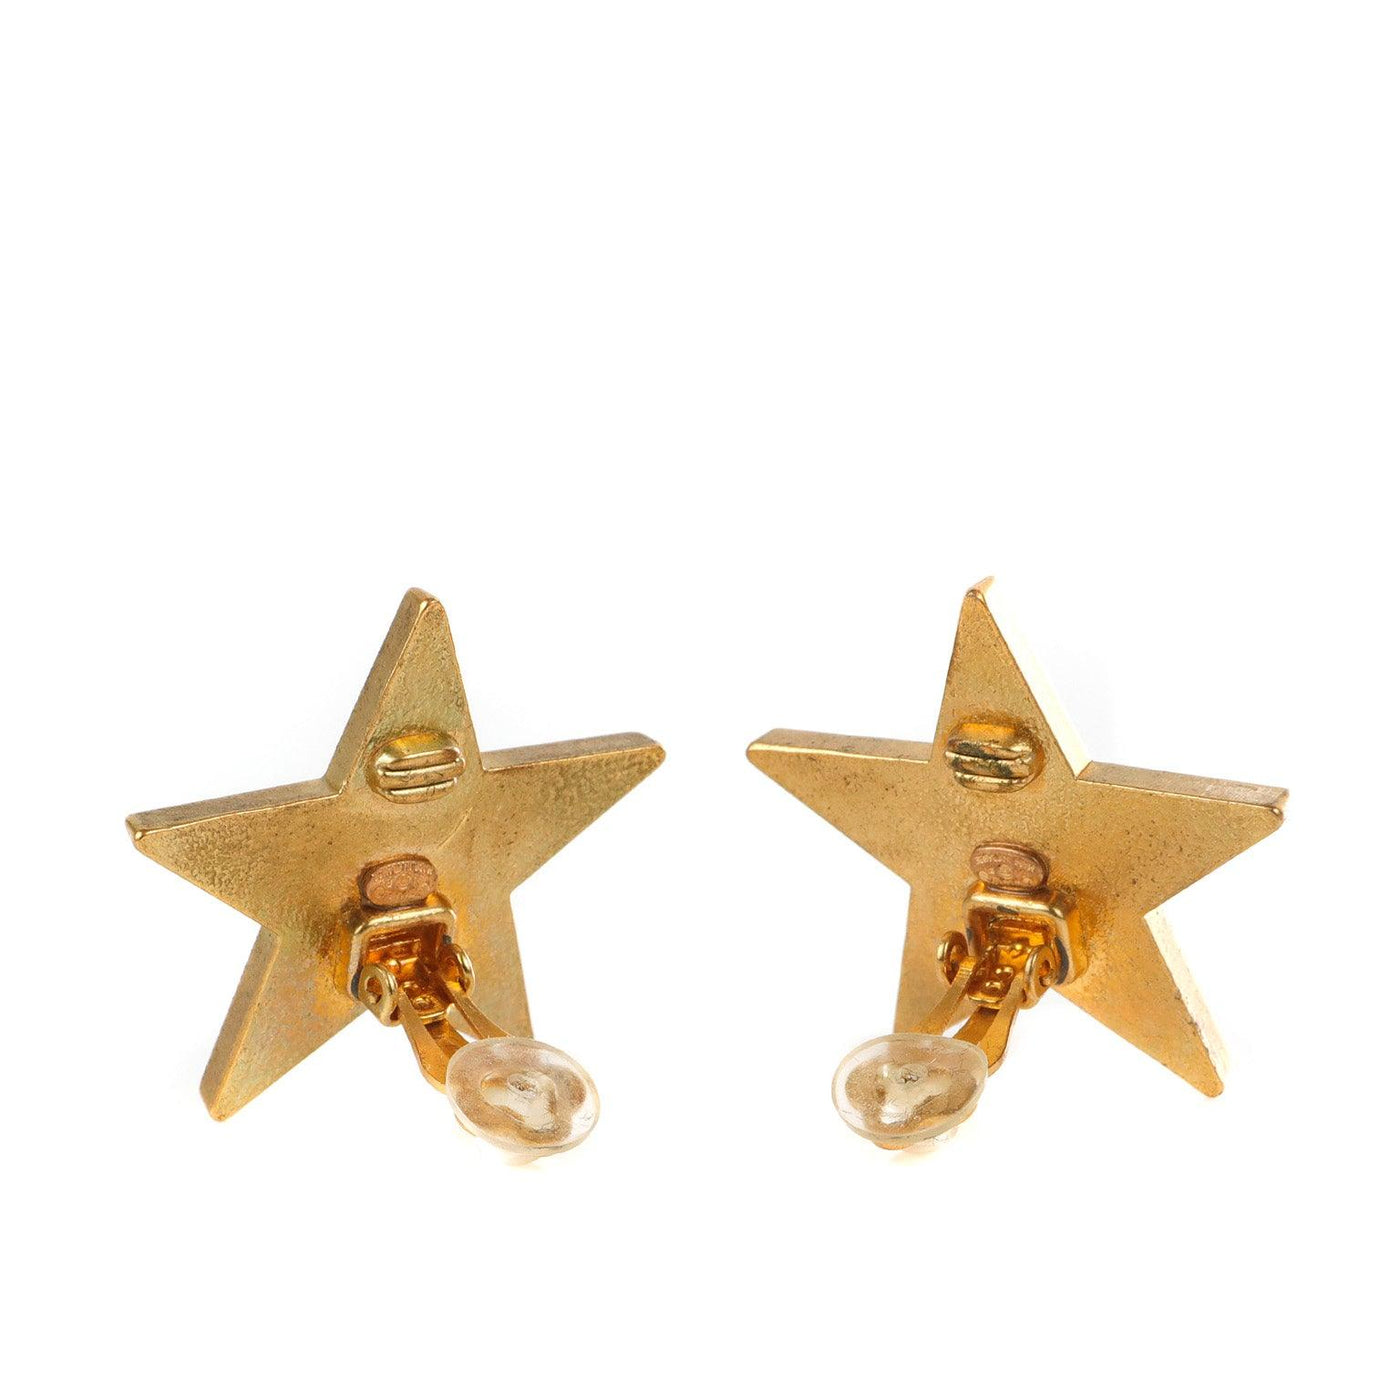 Chanel Enamel CC Star Earrings - Only Authentics